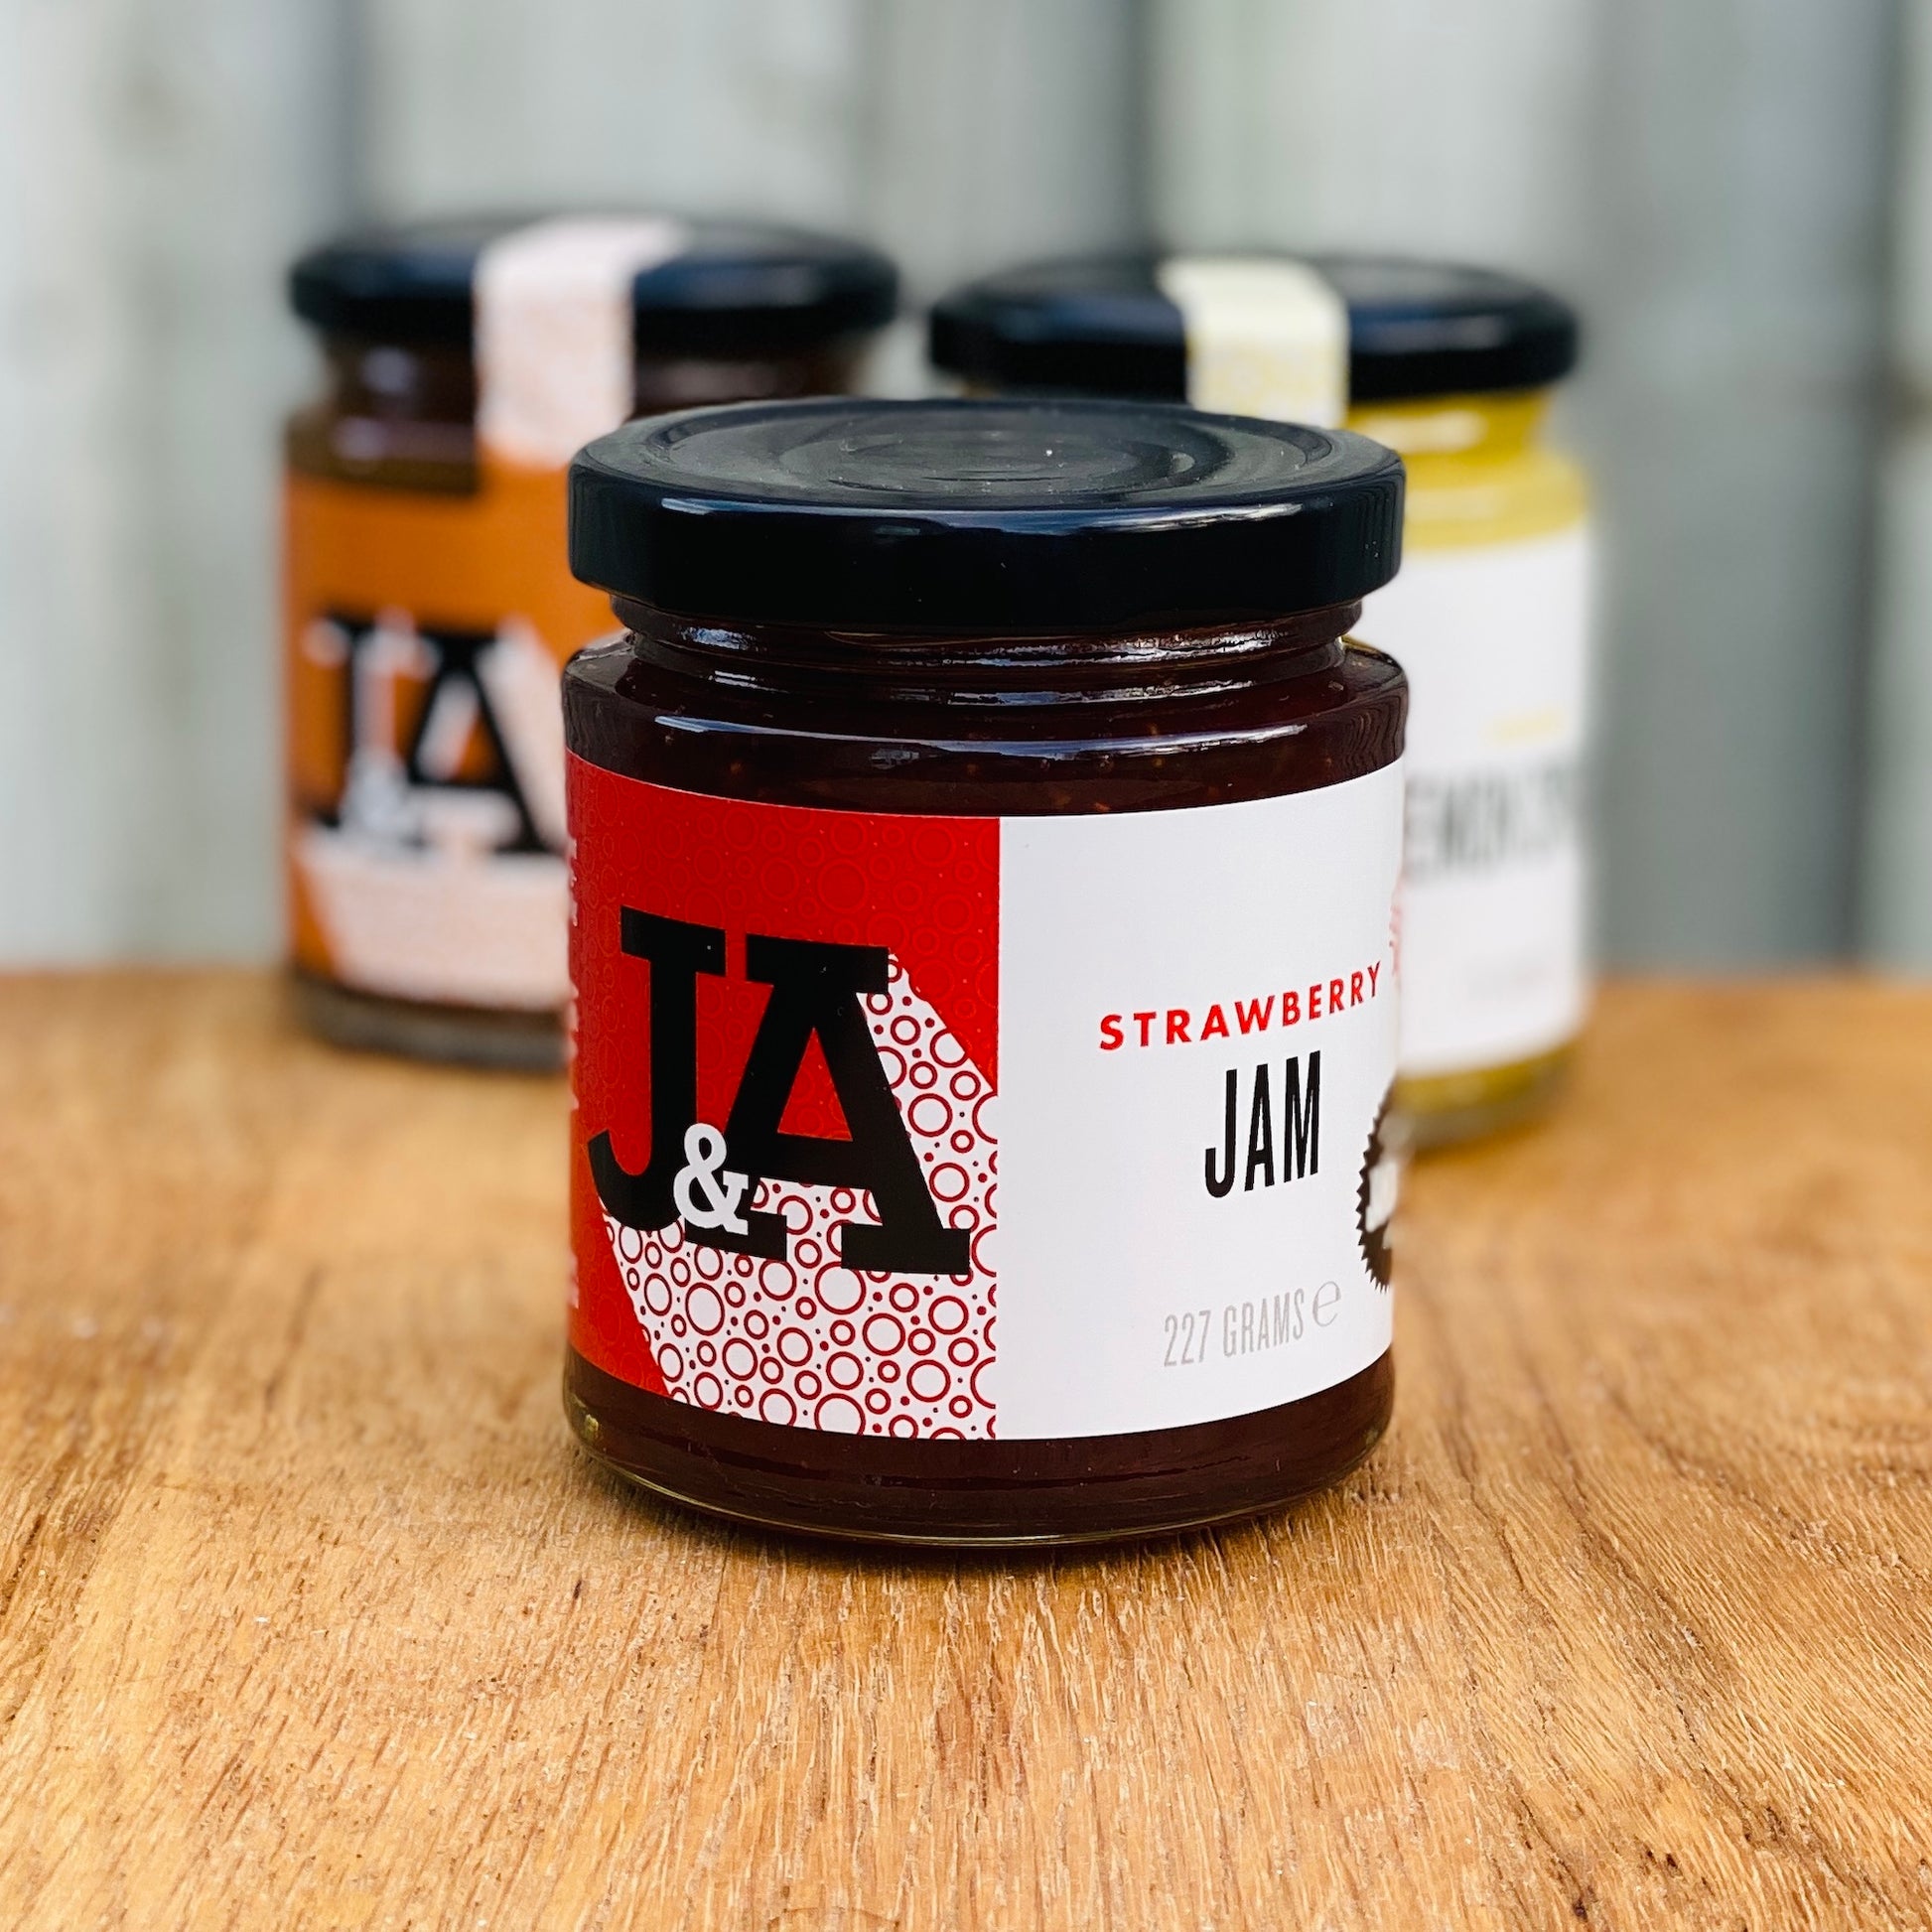 Janda Strawberry Jam. Classic British flavour